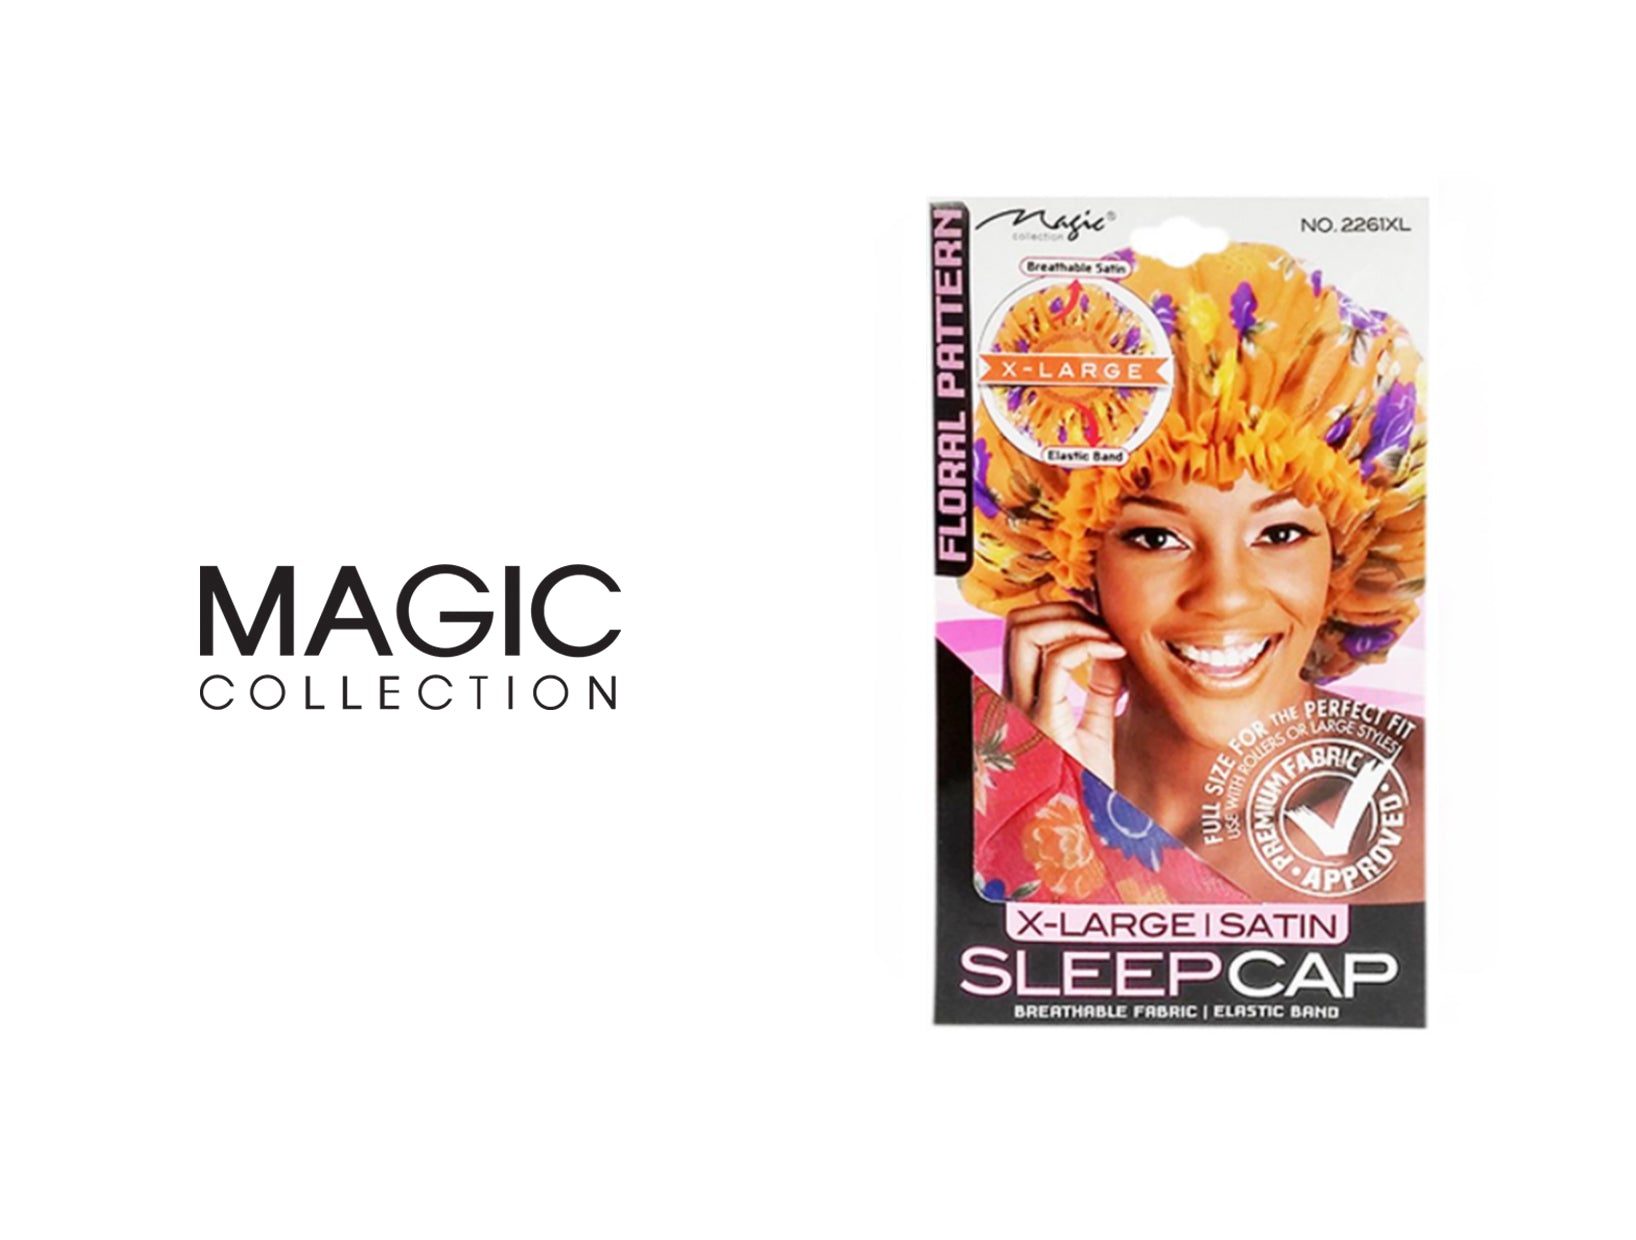 MAGIC COLLECTION SATIN SLEEP CAP #2261